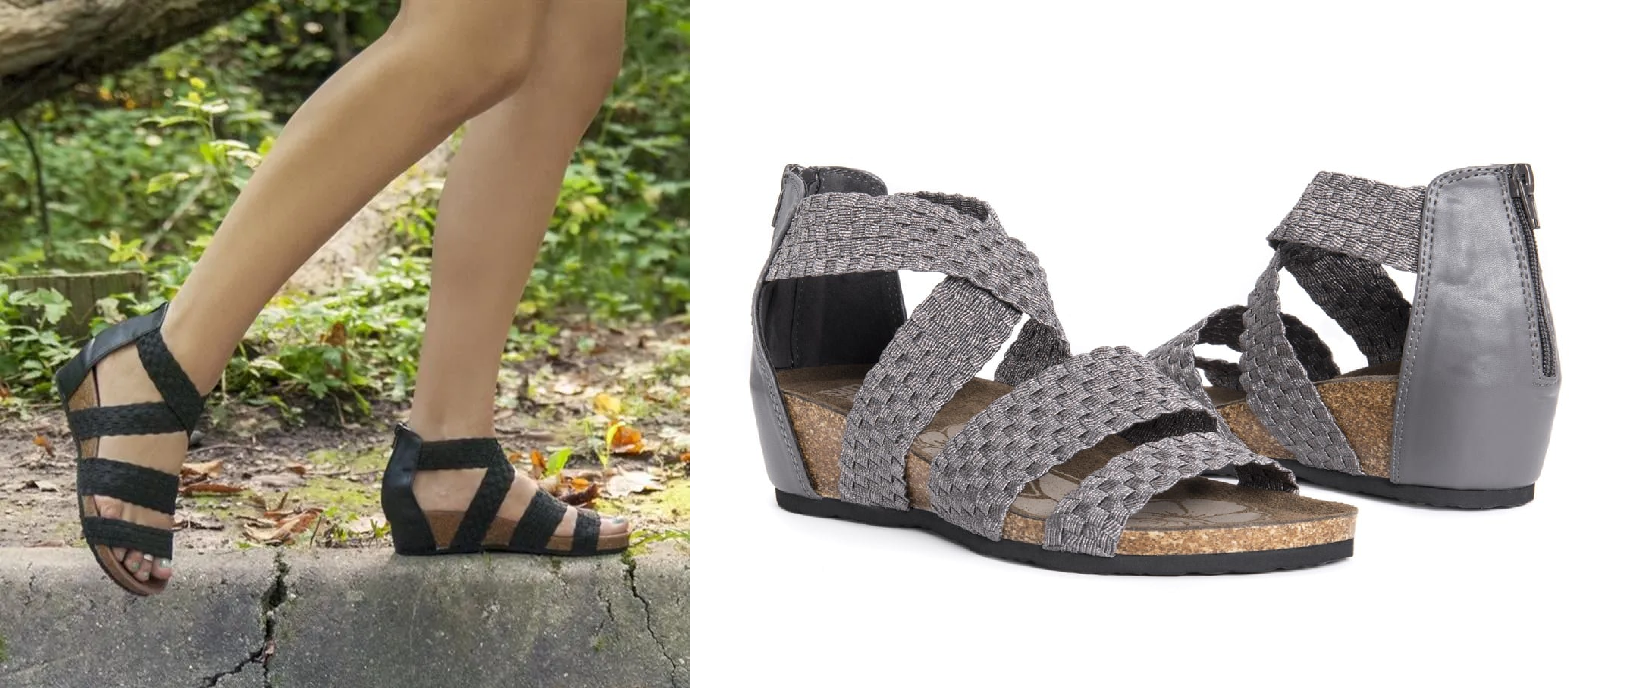 Jane.com - Muk Luks Elle Wedge Sandals just $9.99 + Free Shipping ...